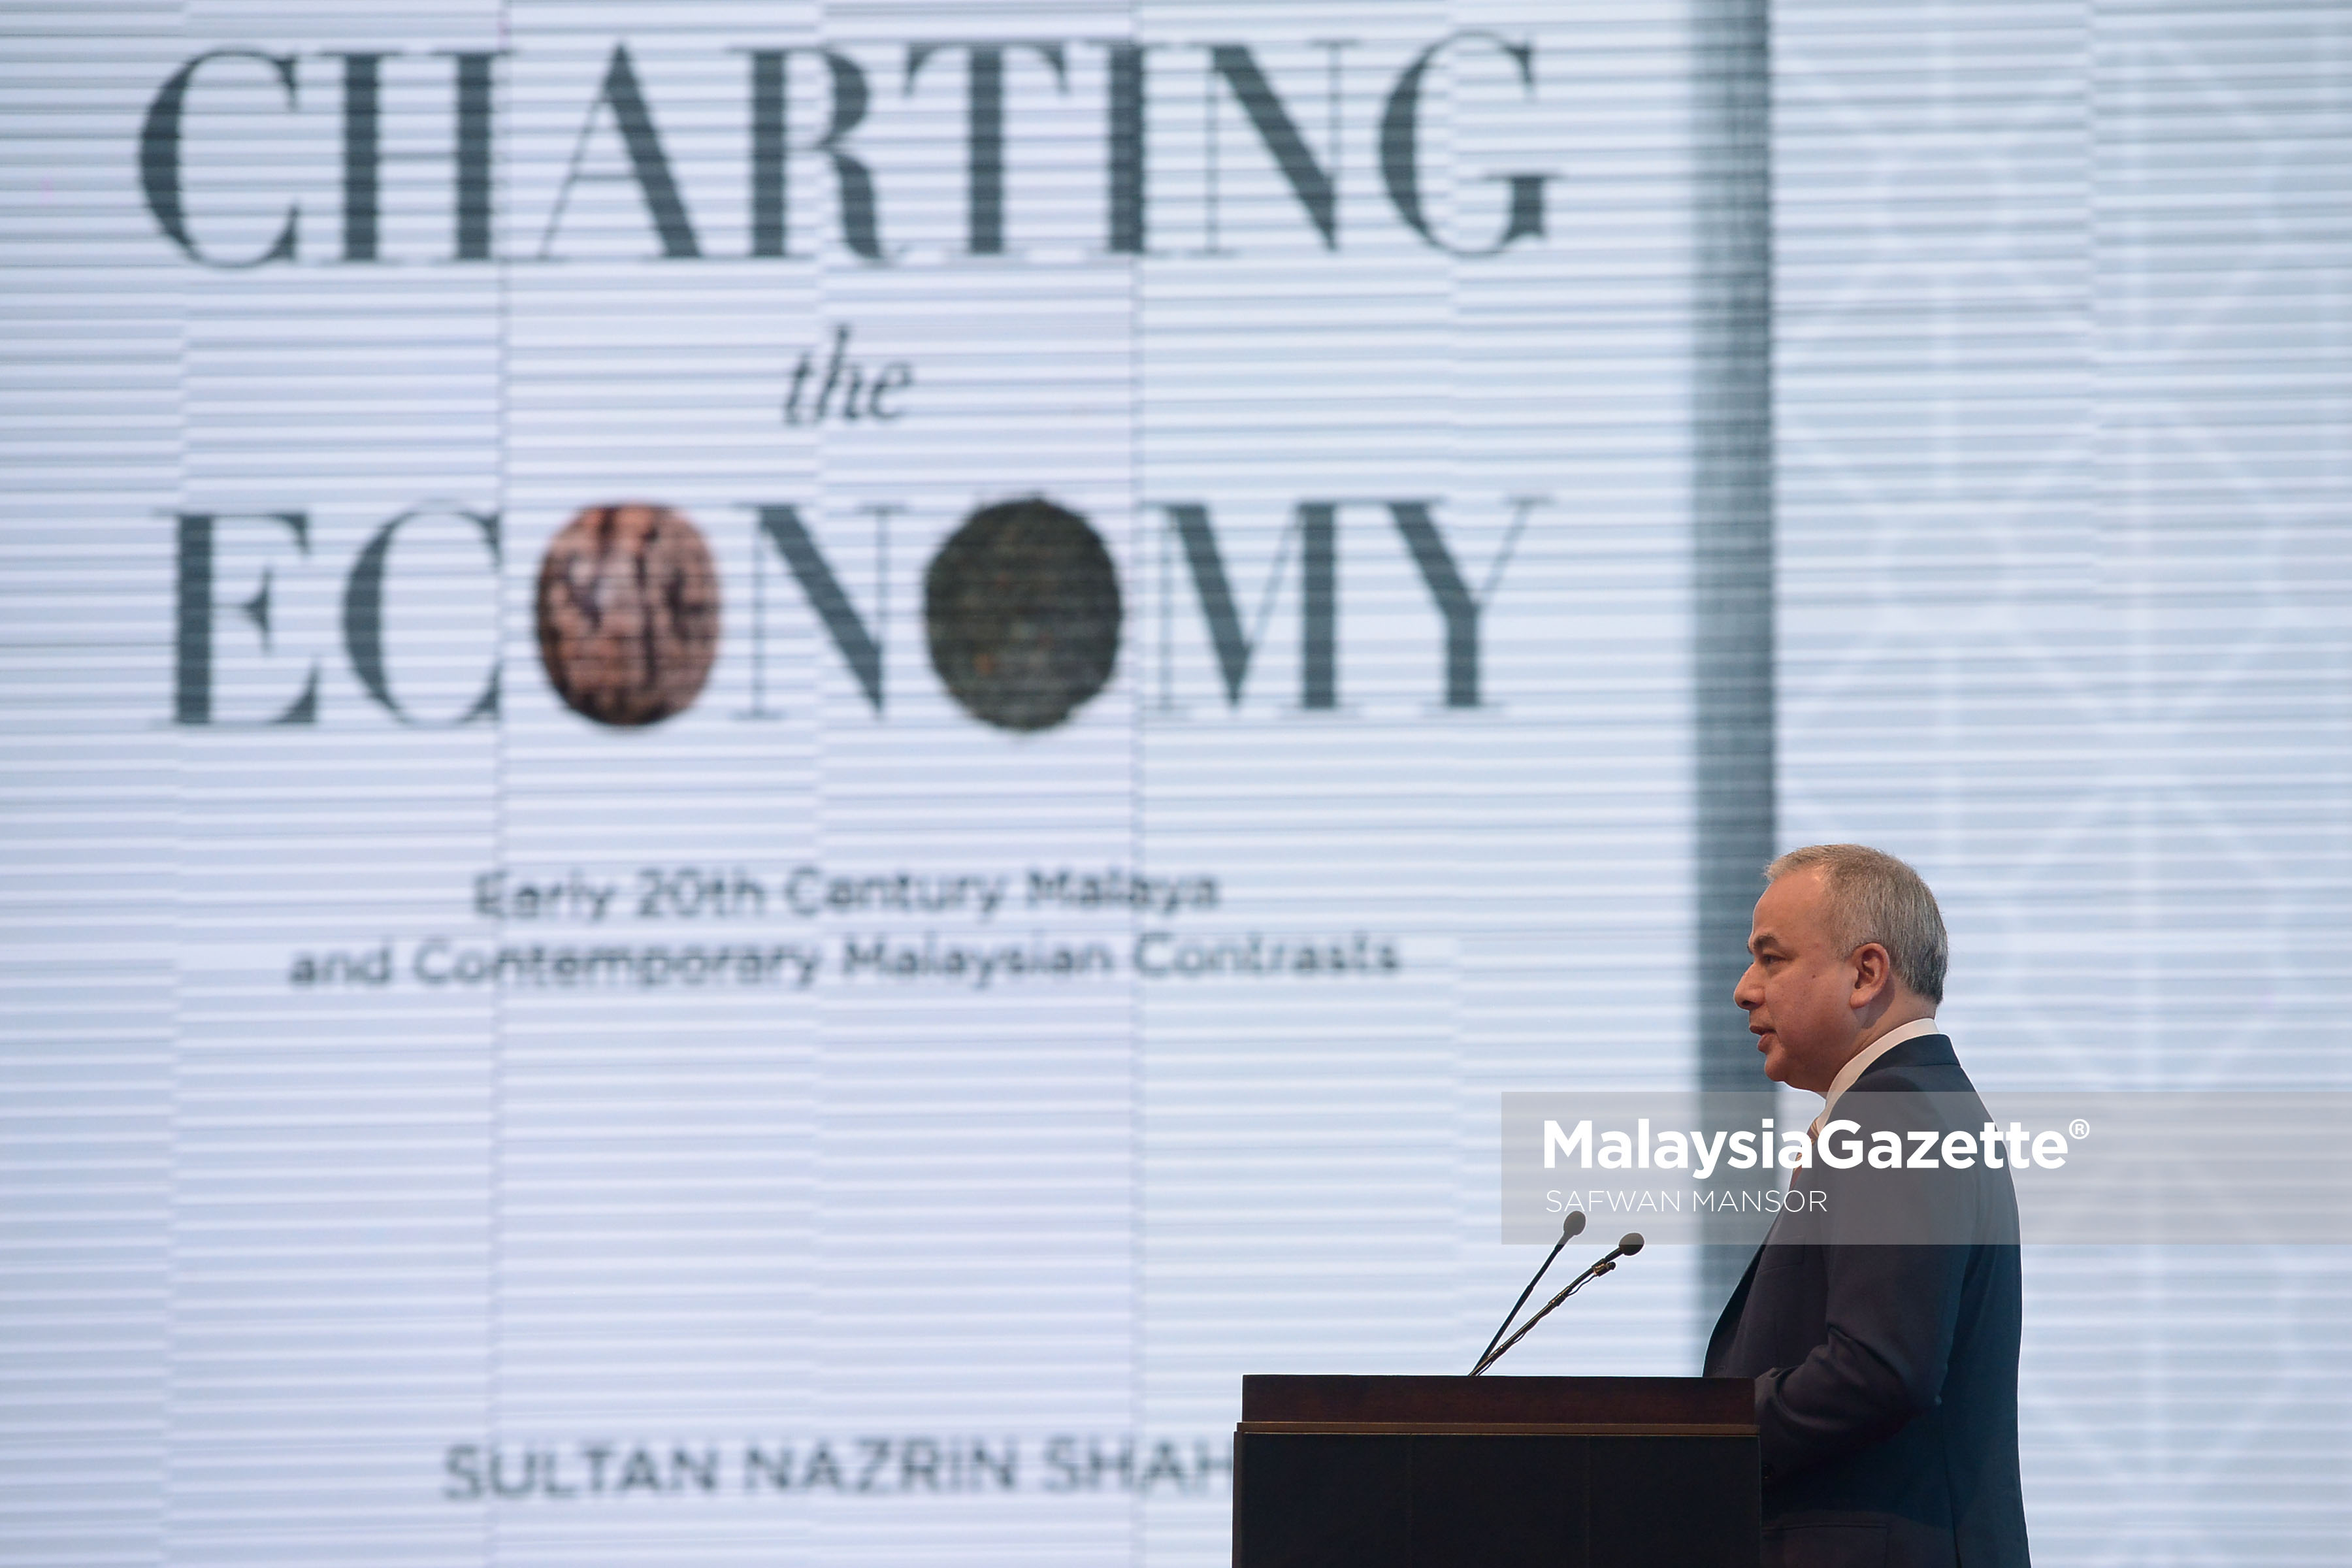 Sultan Perak, Sultan Nazrin Muizzudin Shah berkenan memberi ucapan pada Majlis Pelancaran Buku "Charting The Economy" yang ditulis oleh baginda di The St. Regis, Kuala Lumpur. foto SAFWAN MANSOR, 17 JANUARI 2017